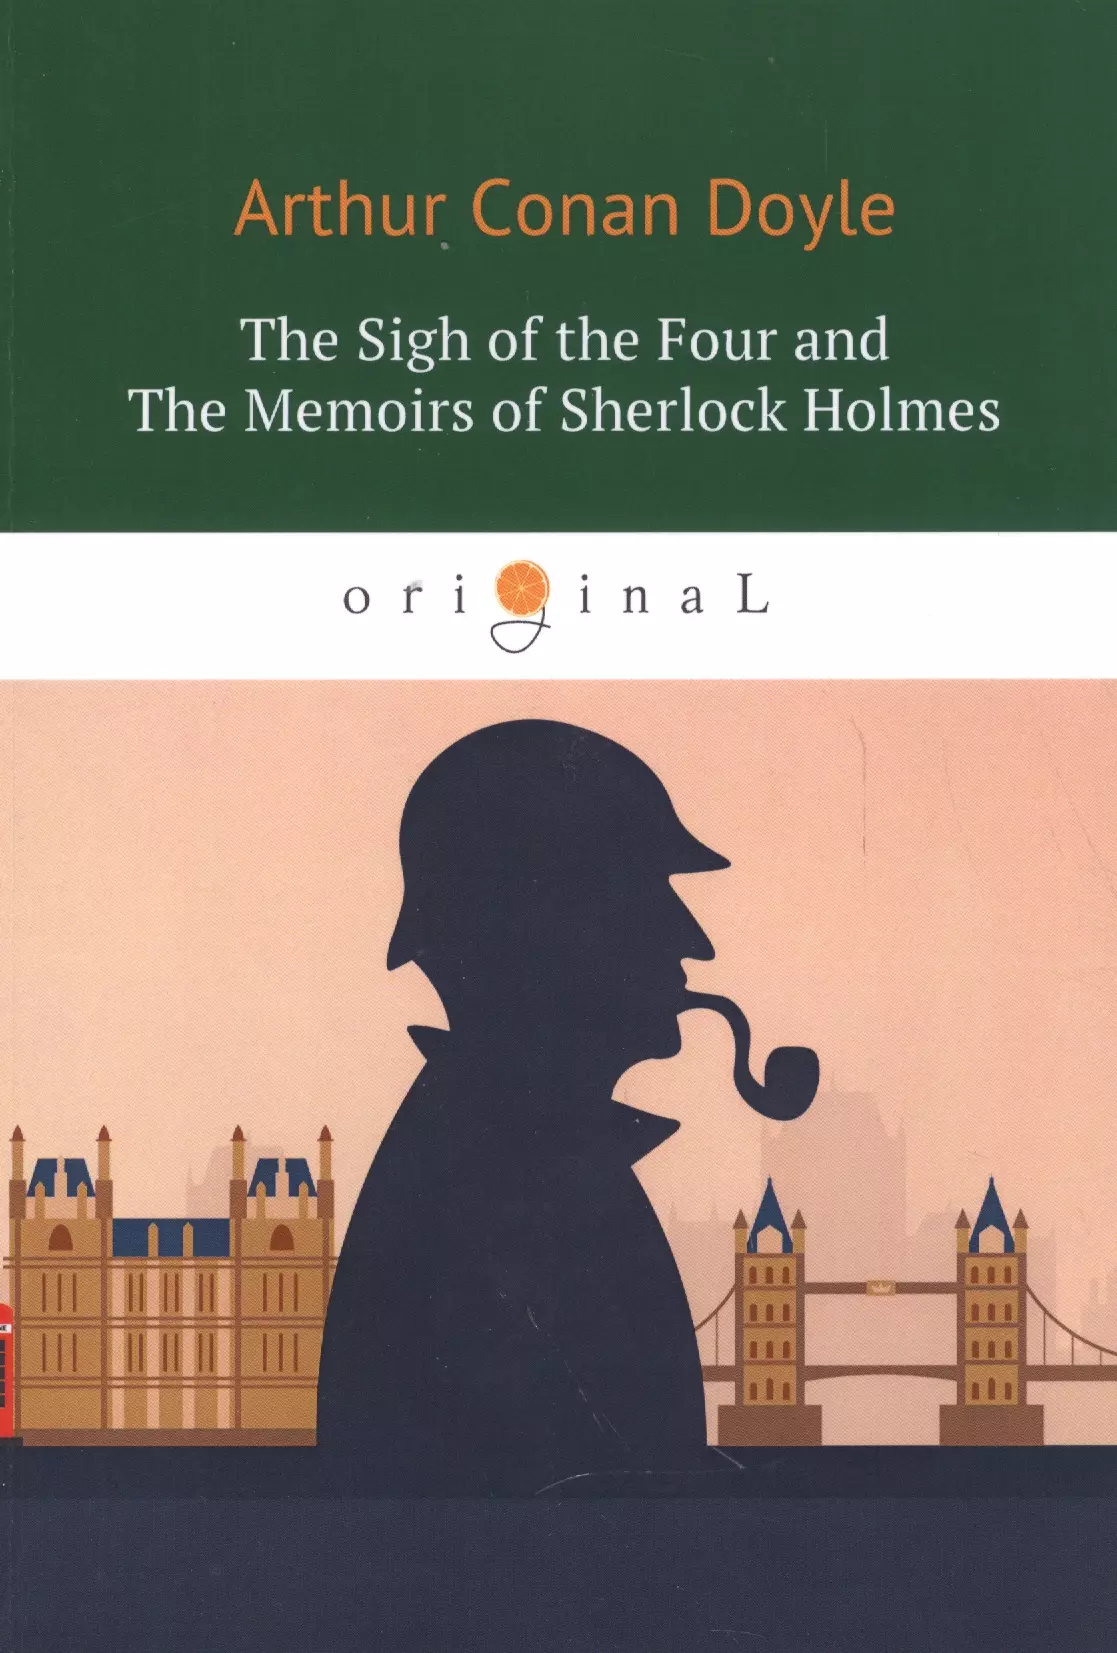 Дойл Артур Конан The Sigh of the Four and The Memoirs of Sherlock Holmes = Знак Четырех и Воспоминания Шерлока Холмса friedman m the complete aliens omnimbus volume five